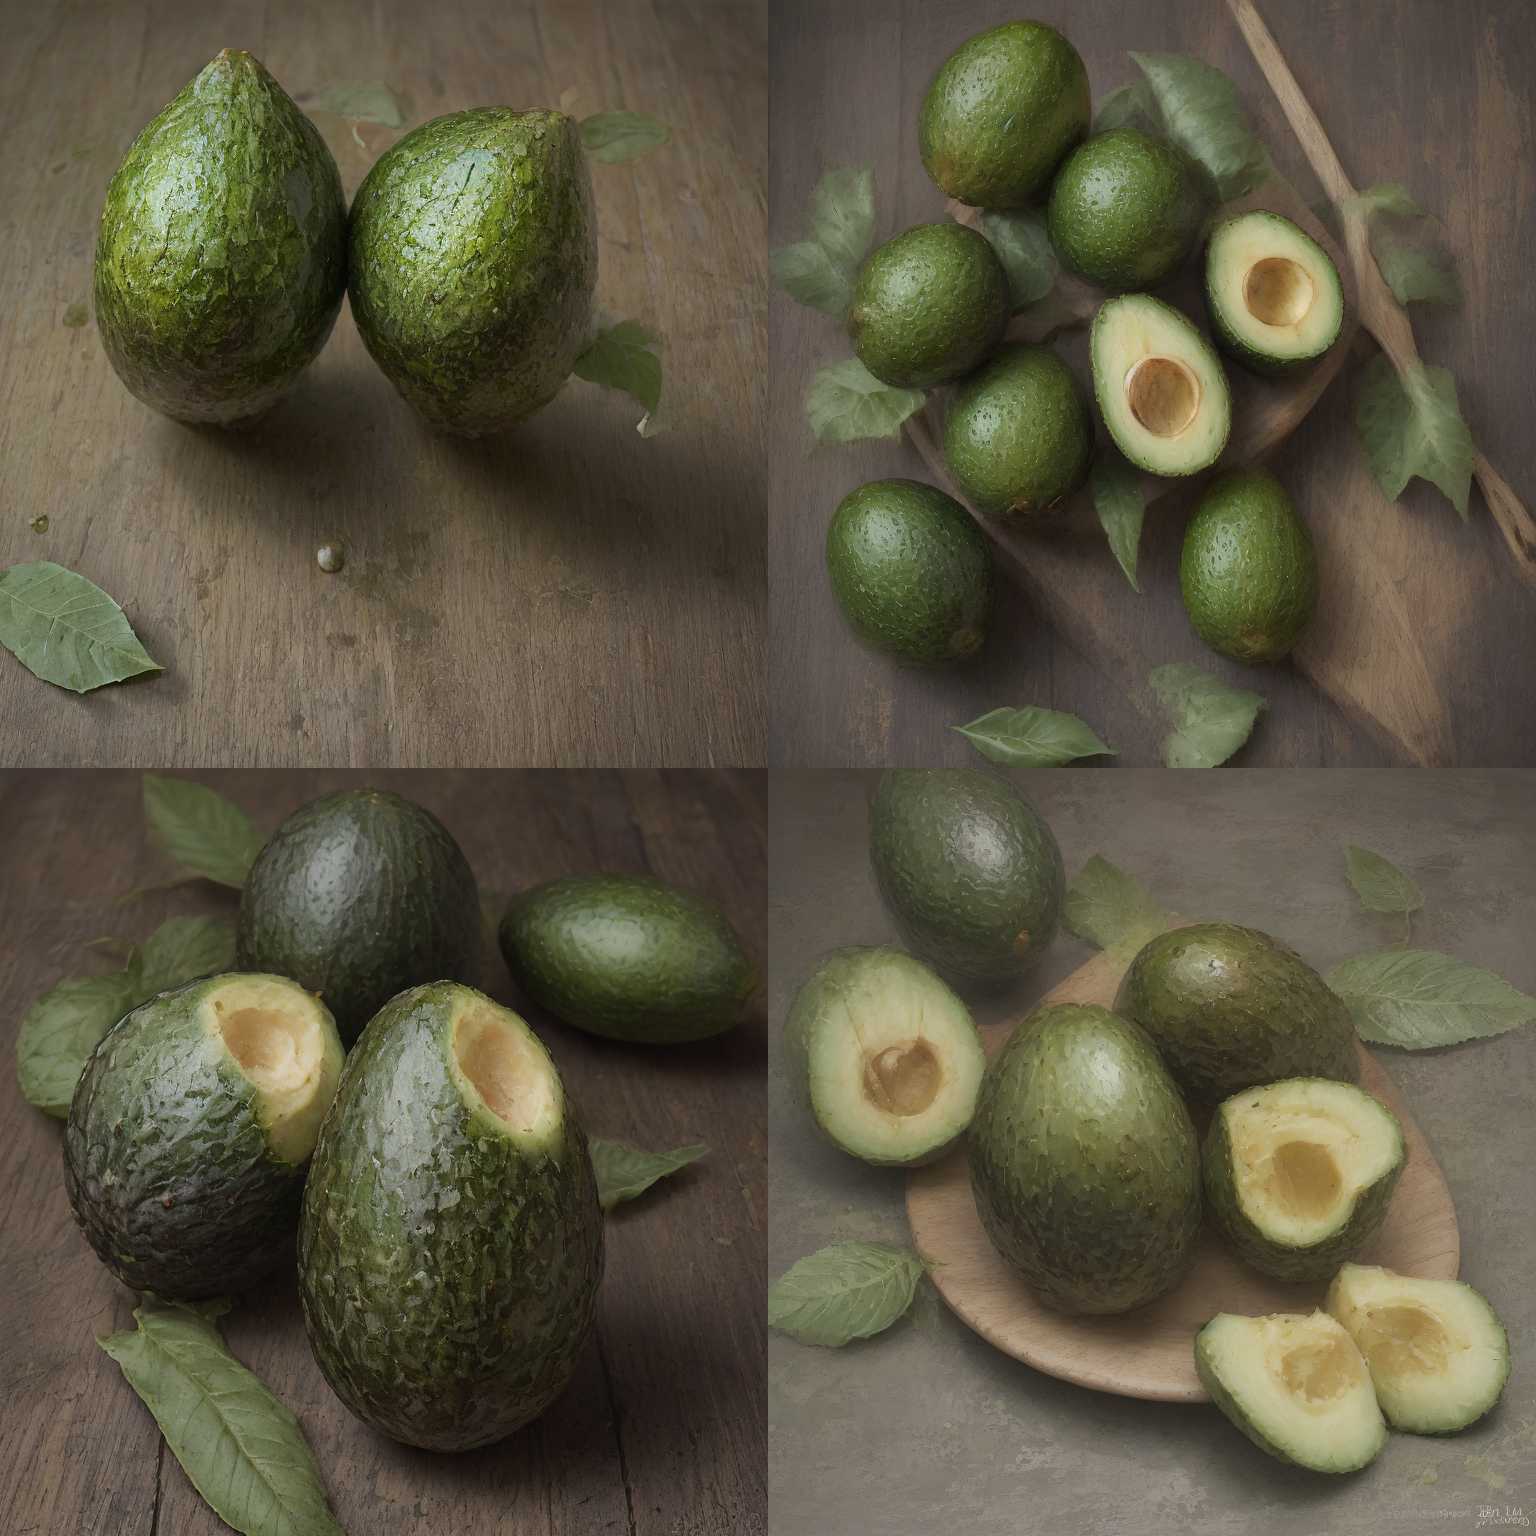 An overripe avocado